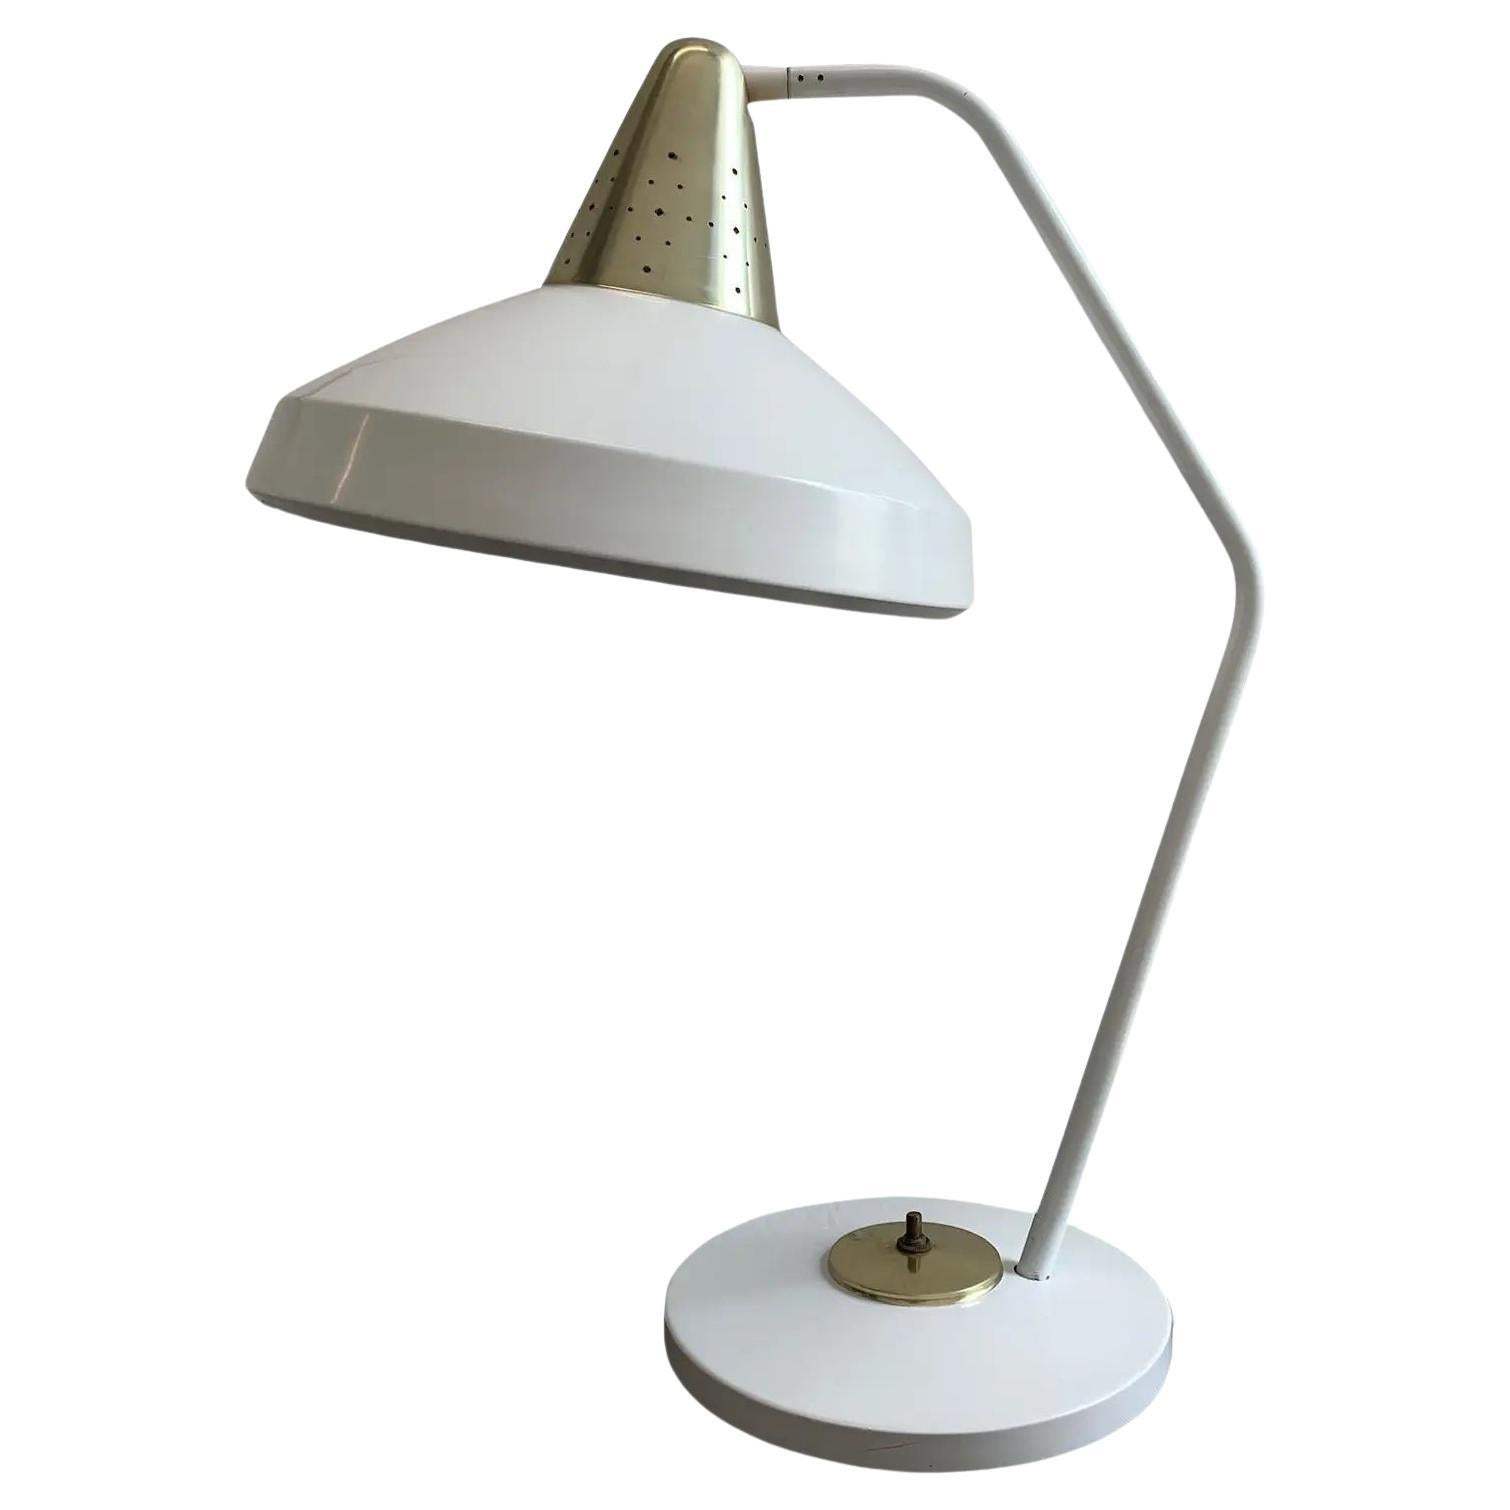 Vintage White Metal Desk Lamp by Swivelier, Attributed to Bill Scarlett, 1960s